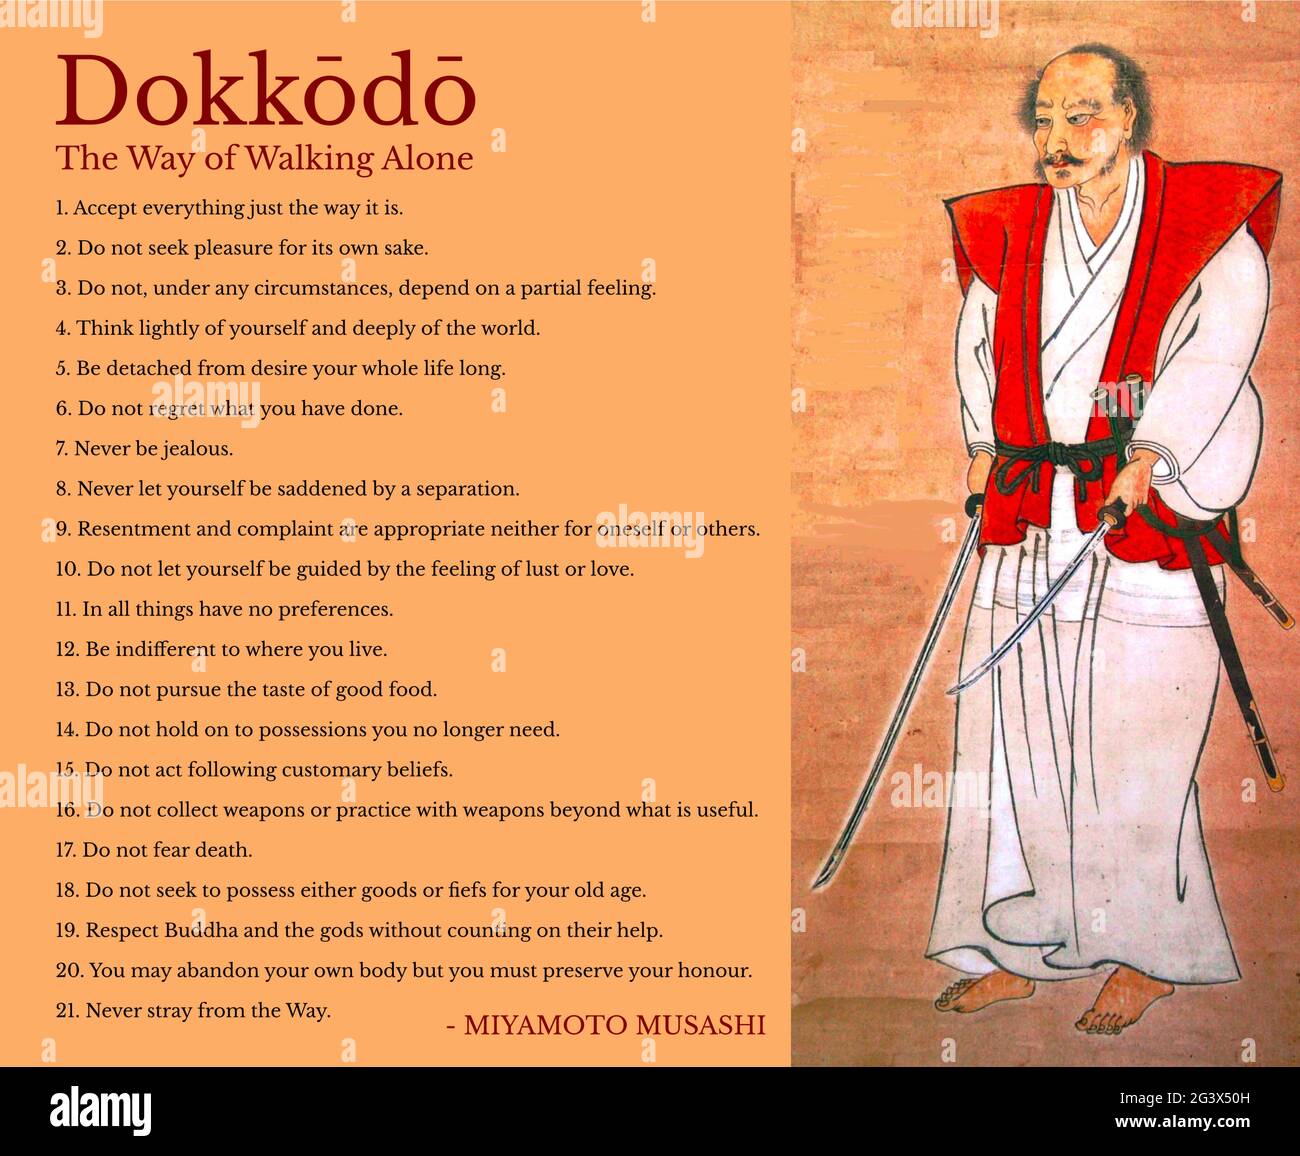 Miyamoto Musashi - Dokodo - The Way of Walking Alone Stock Photo